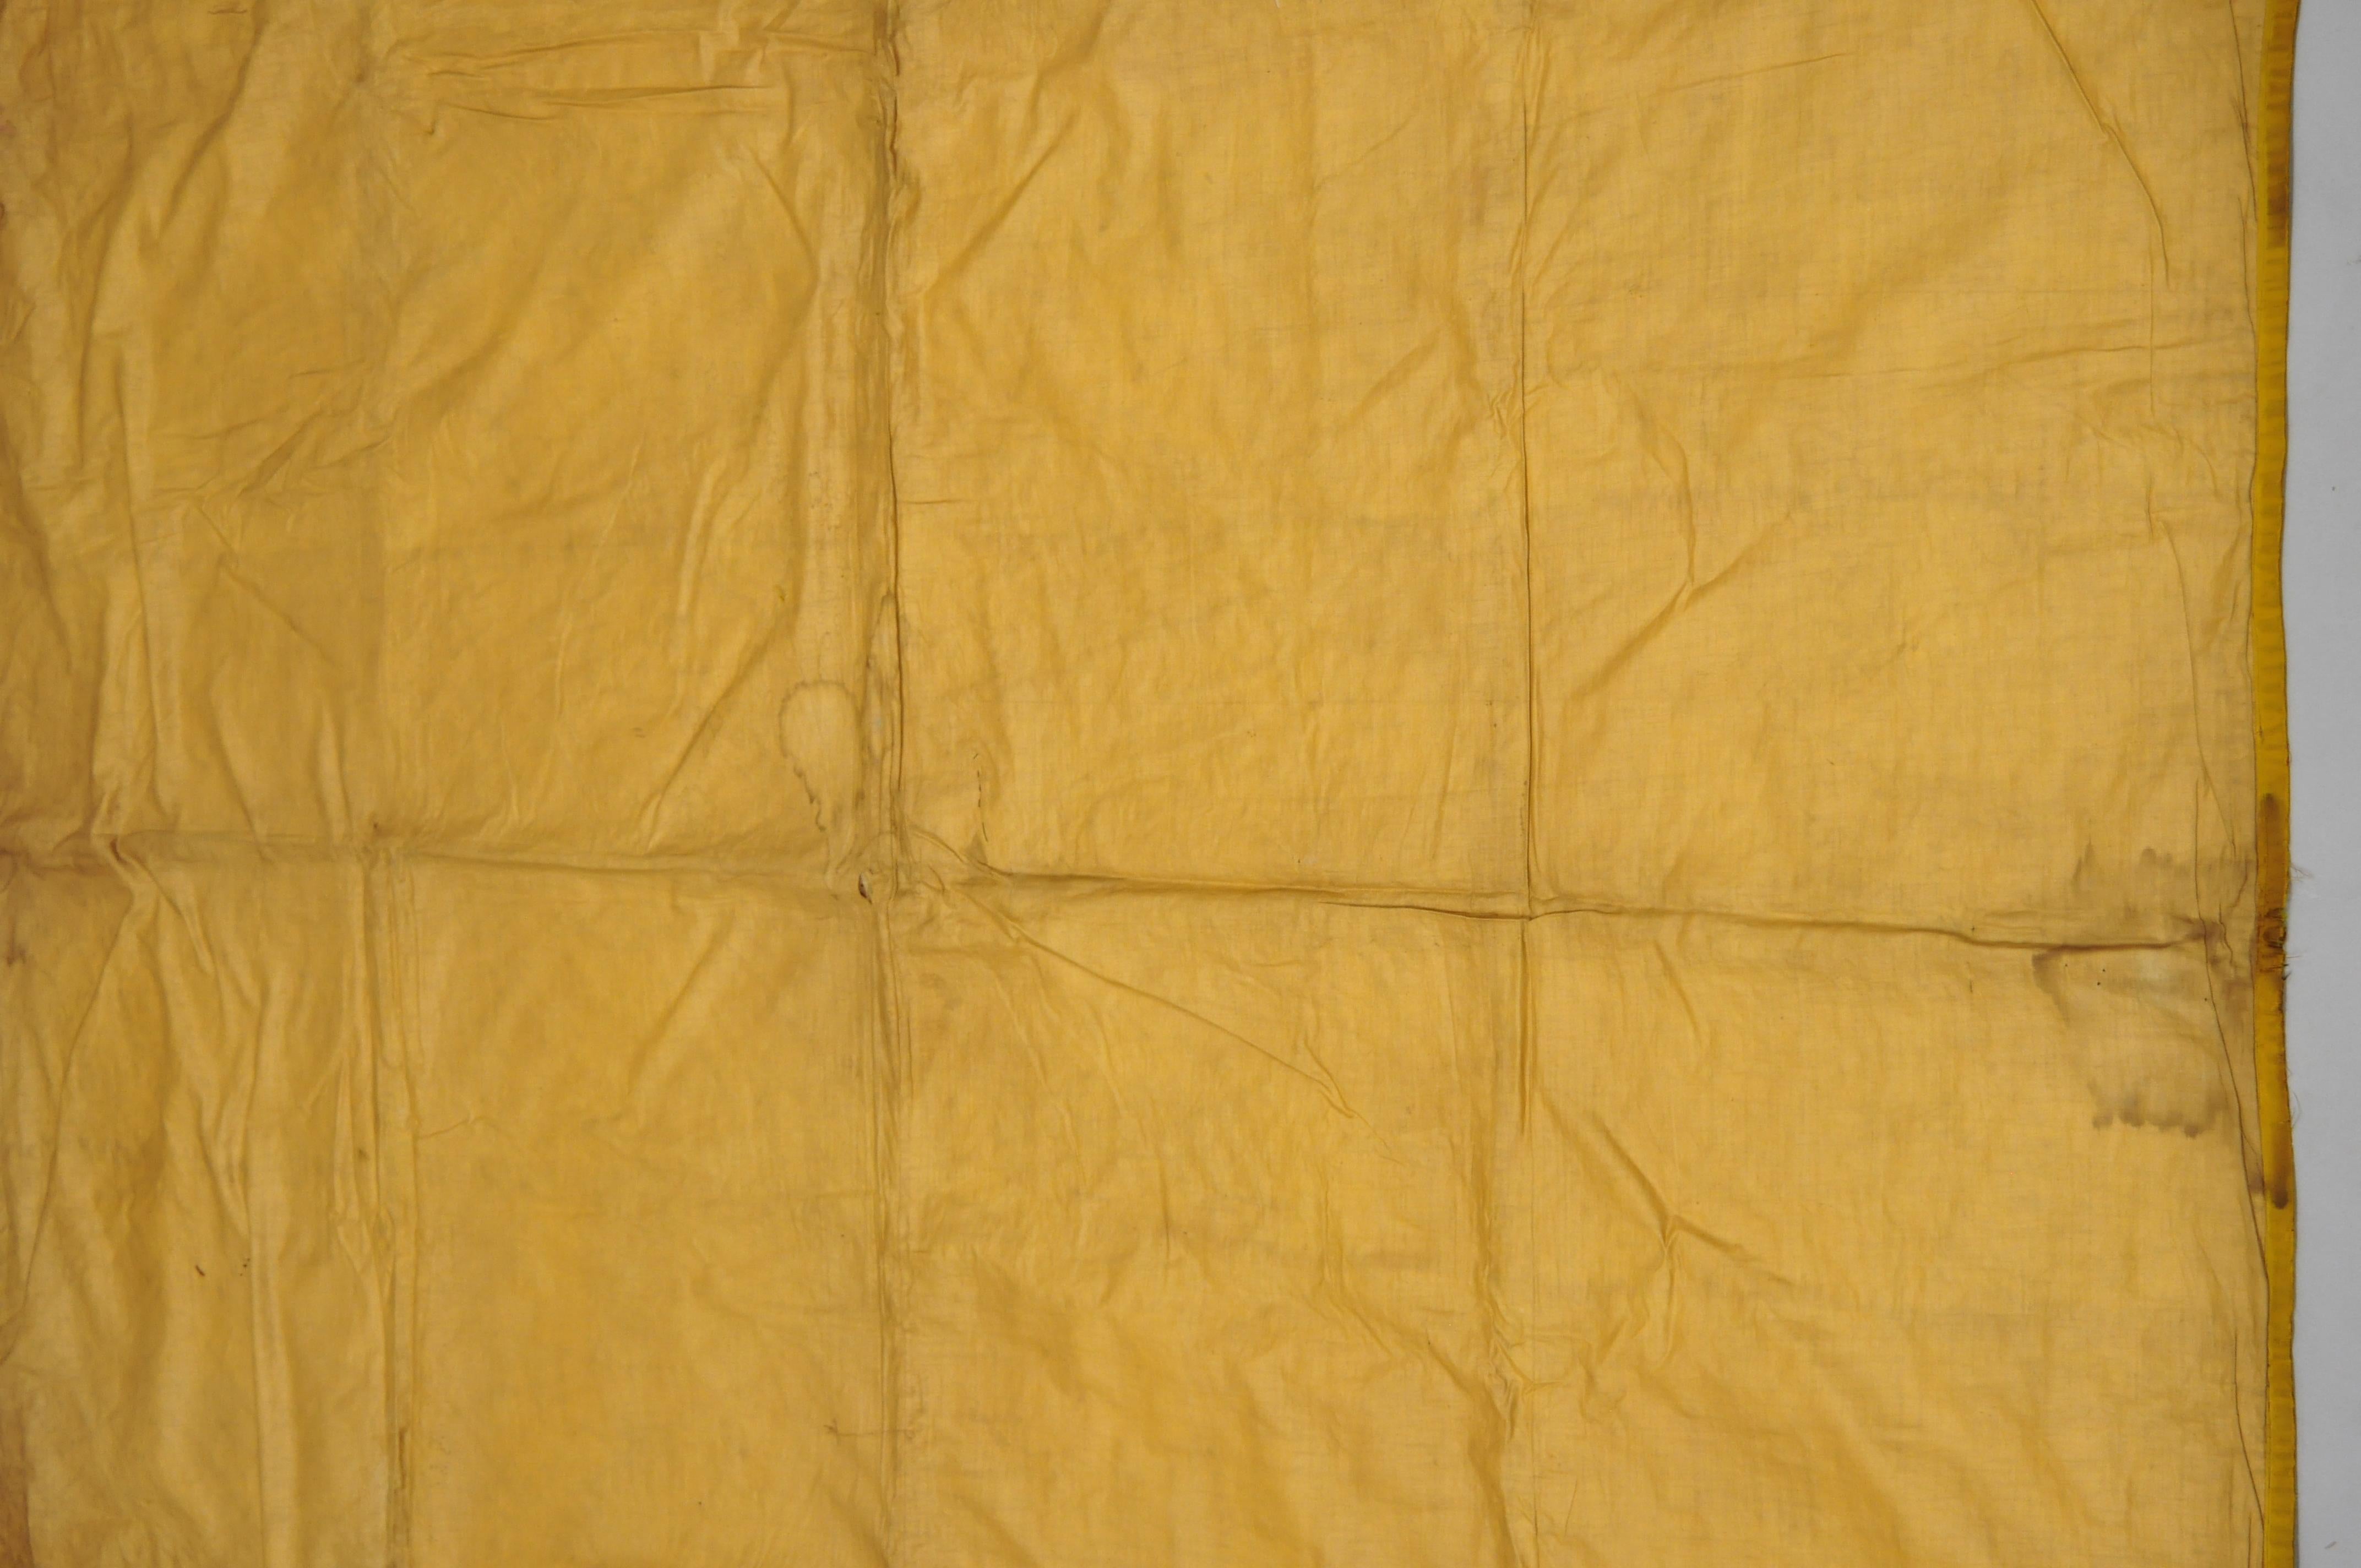 Handmade Folk Art Quilt Comforter Blanket Crazy Patchwork Green Yellow Red 2